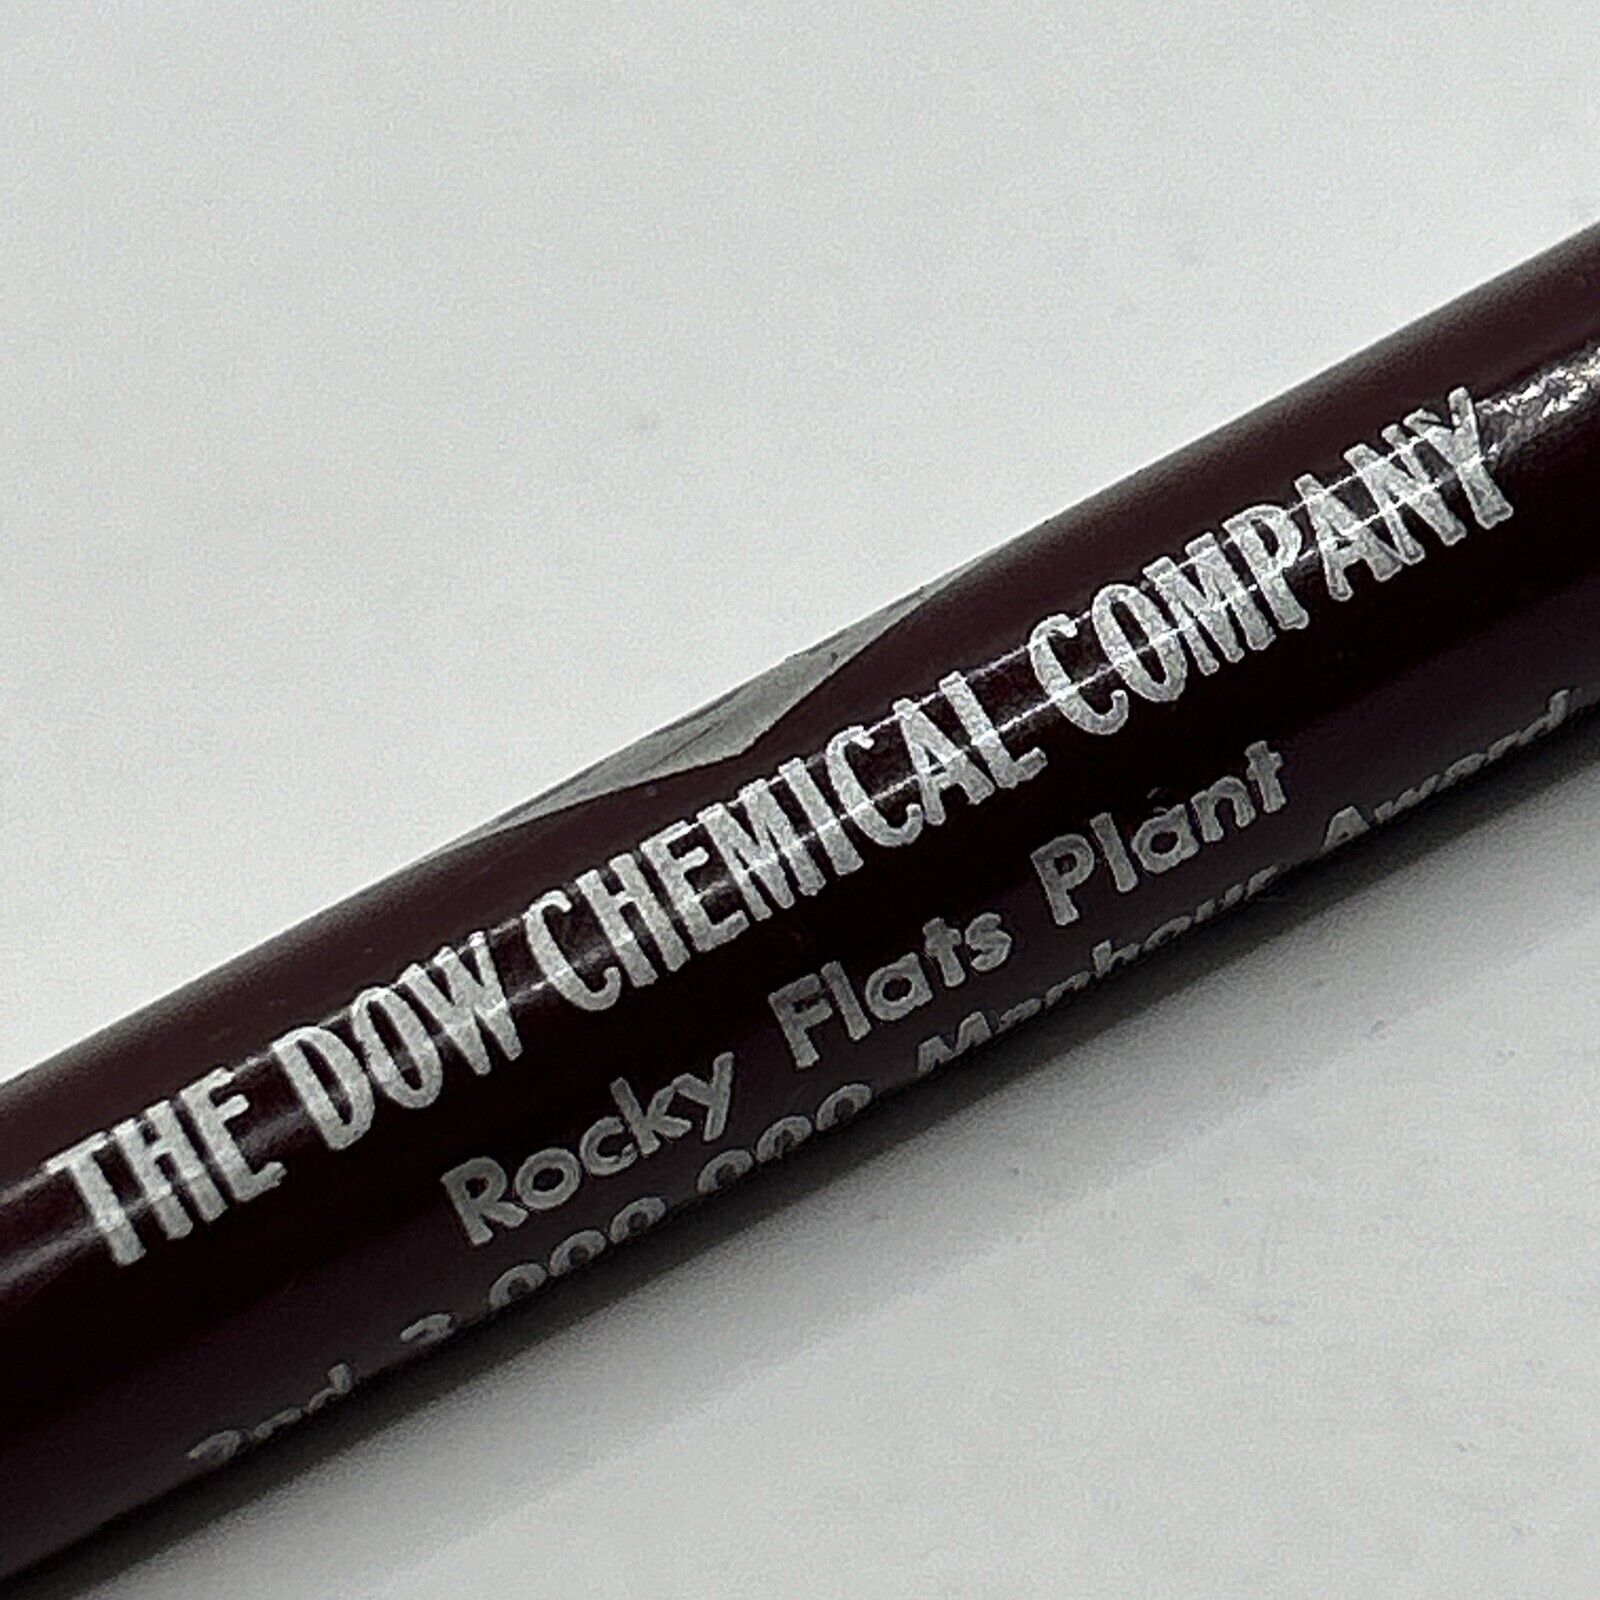 VTG Ballpoint Pen Dow Chemical Rocky Flats Plant 1958